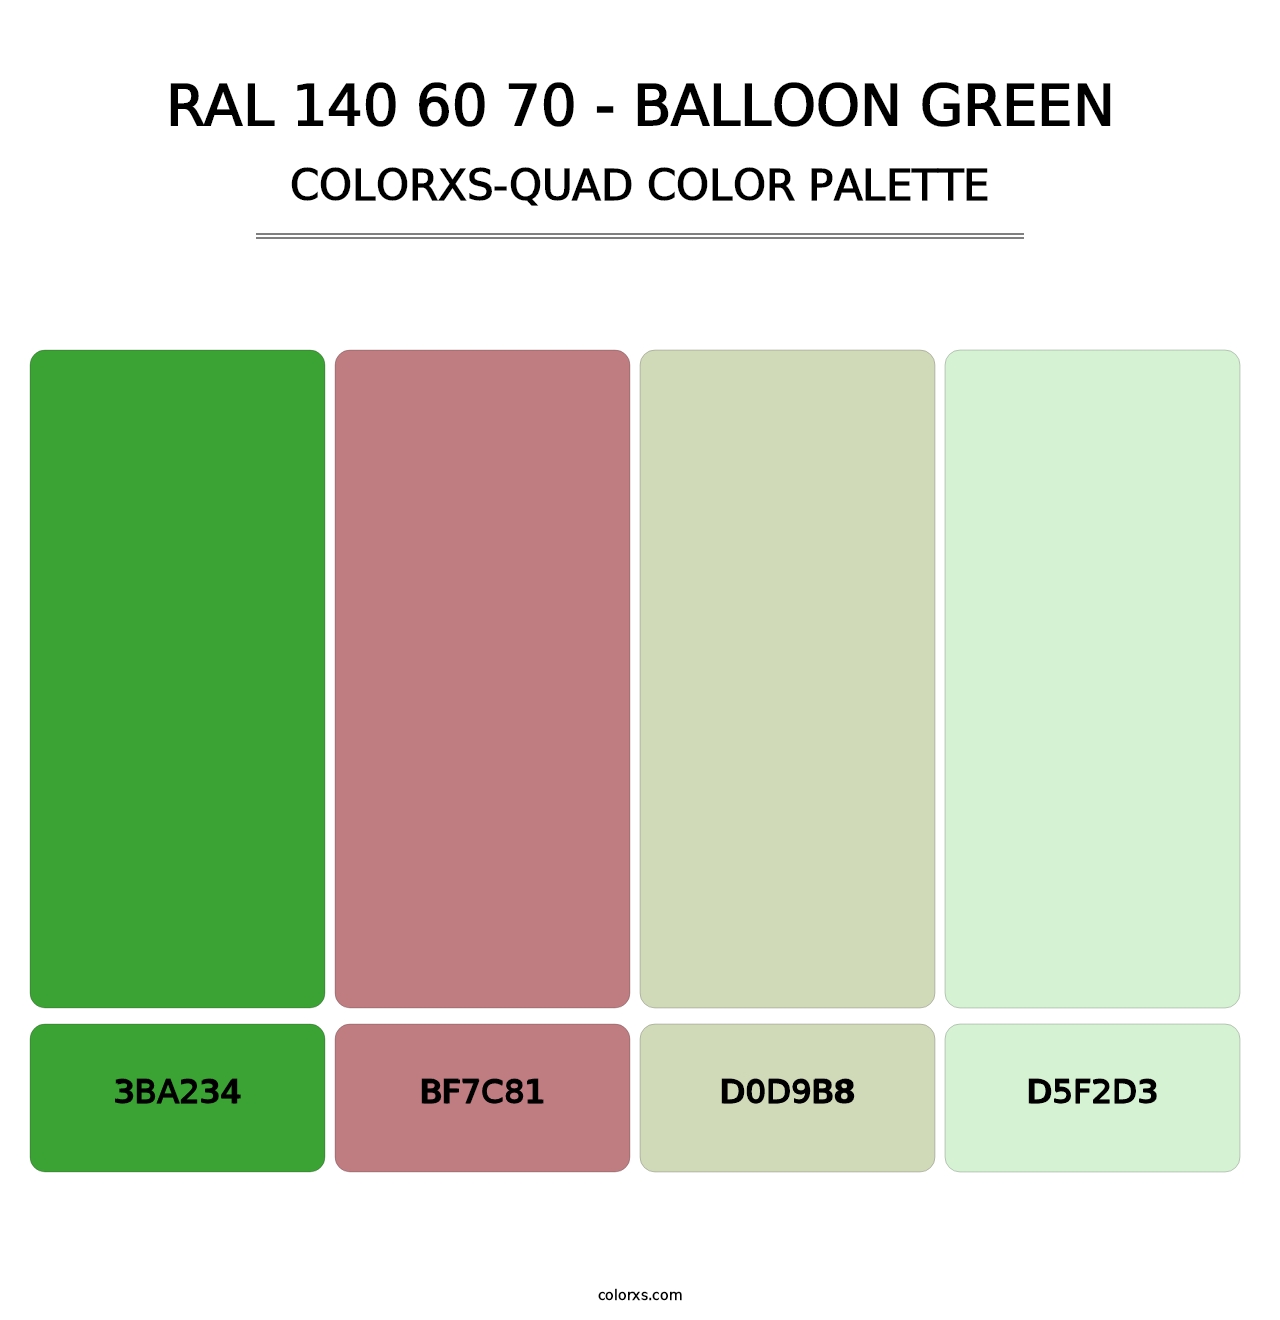 RAL 140 60 70 - Balloon Green - Colorxs Quad Palette